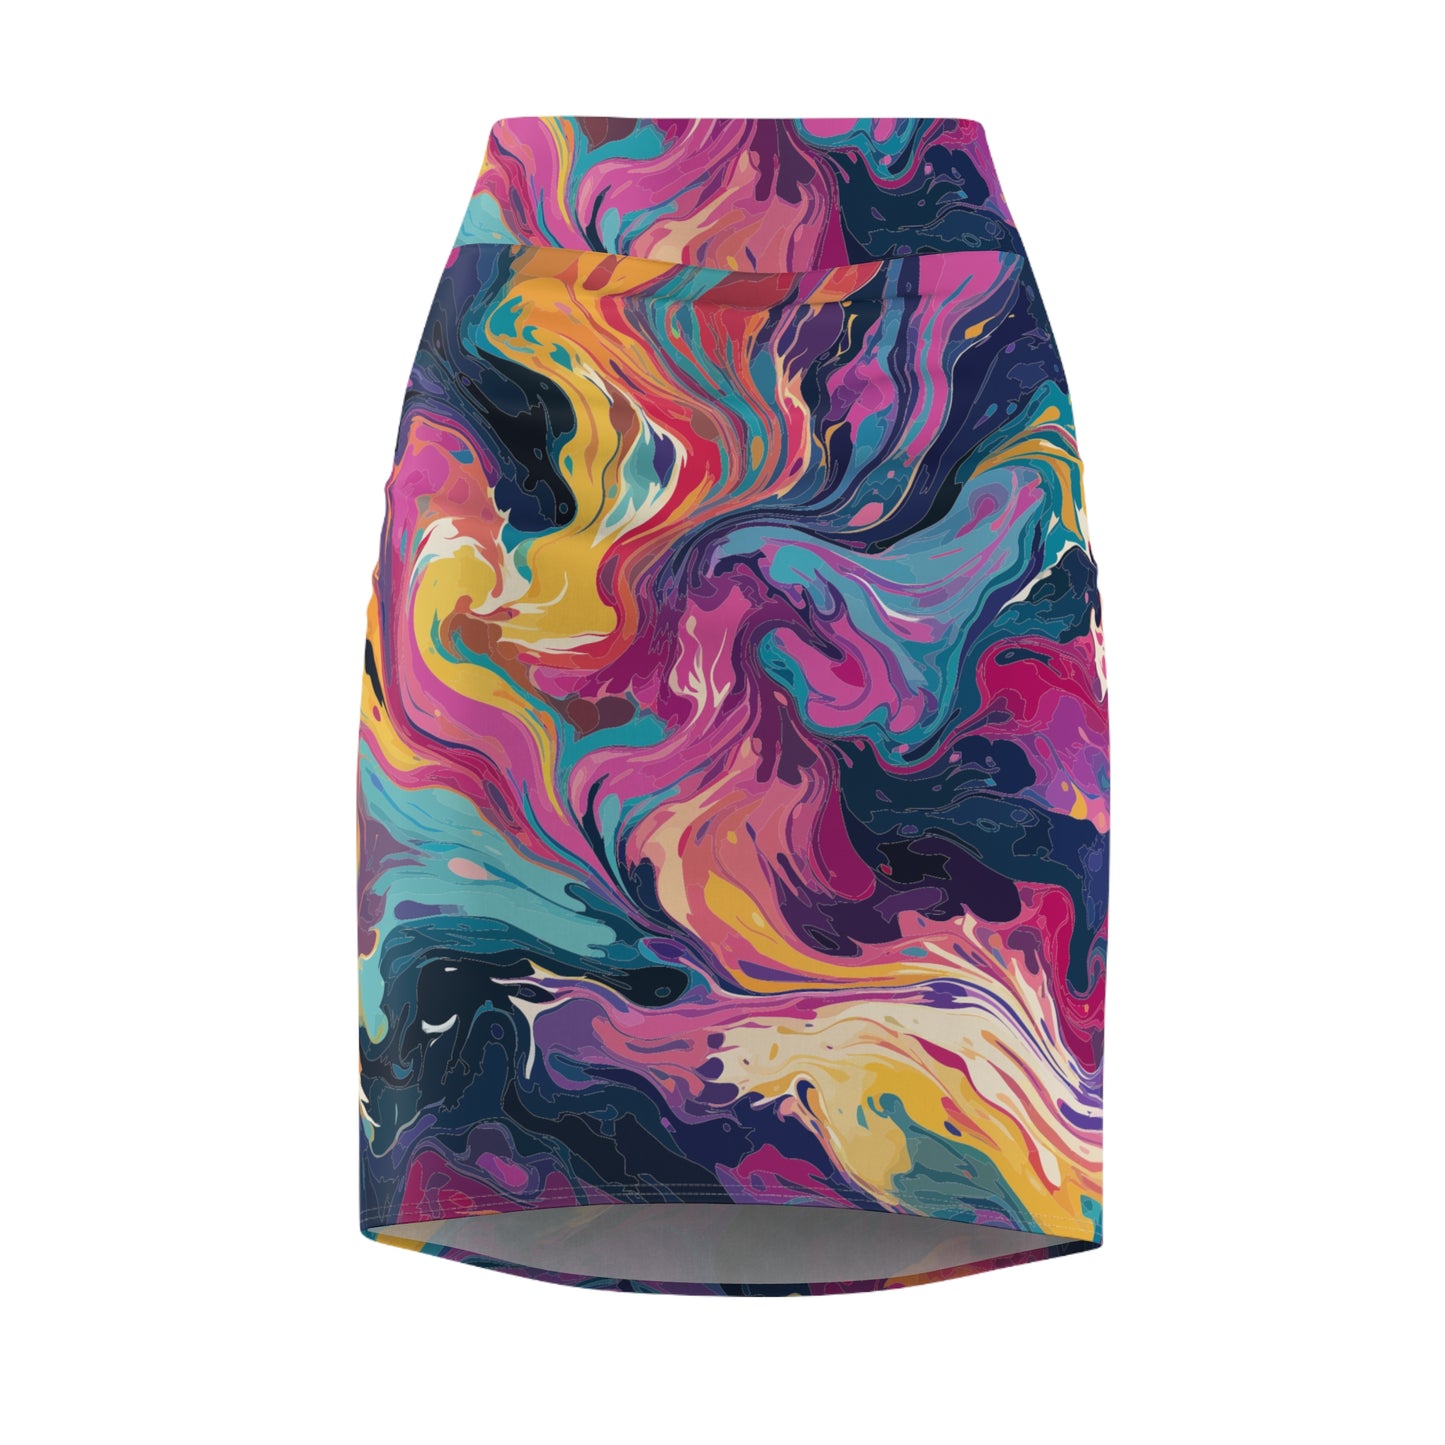 Tie-Dye Delight Pencil Skirt